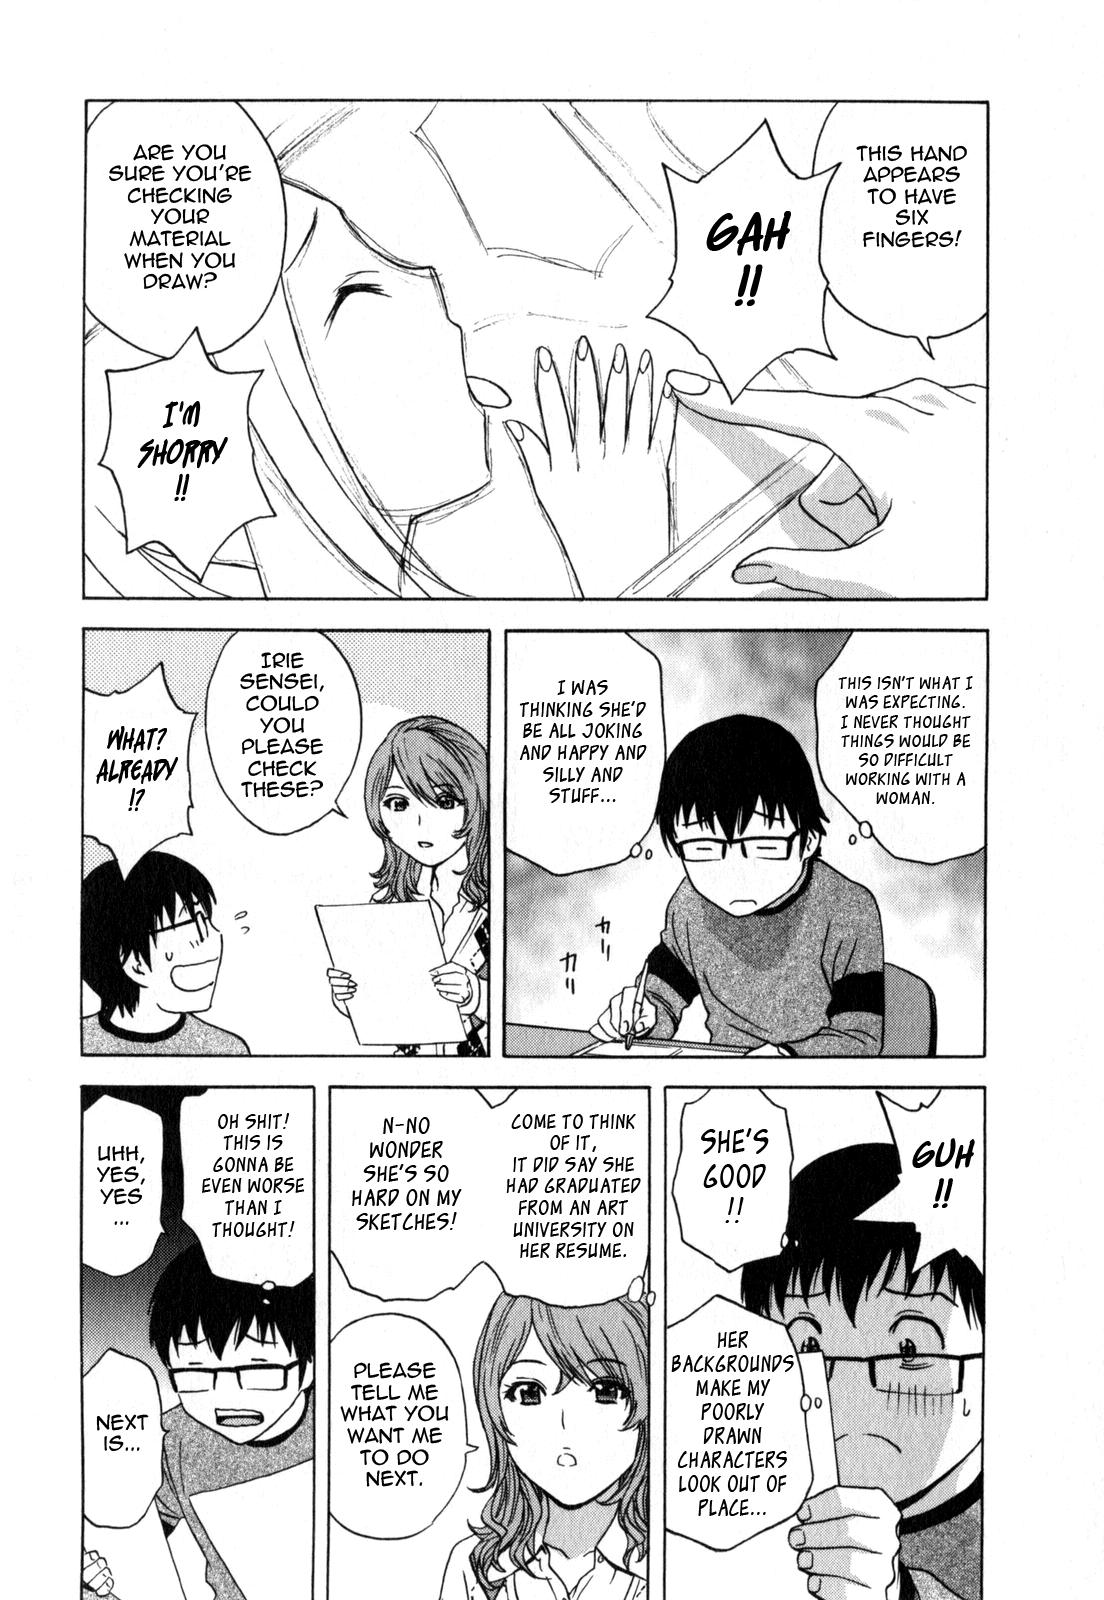 [Hidemaru] Life with Married Women Just Like a Manga 2 - Ch. 1-2 [English] {Tadanohito} 31